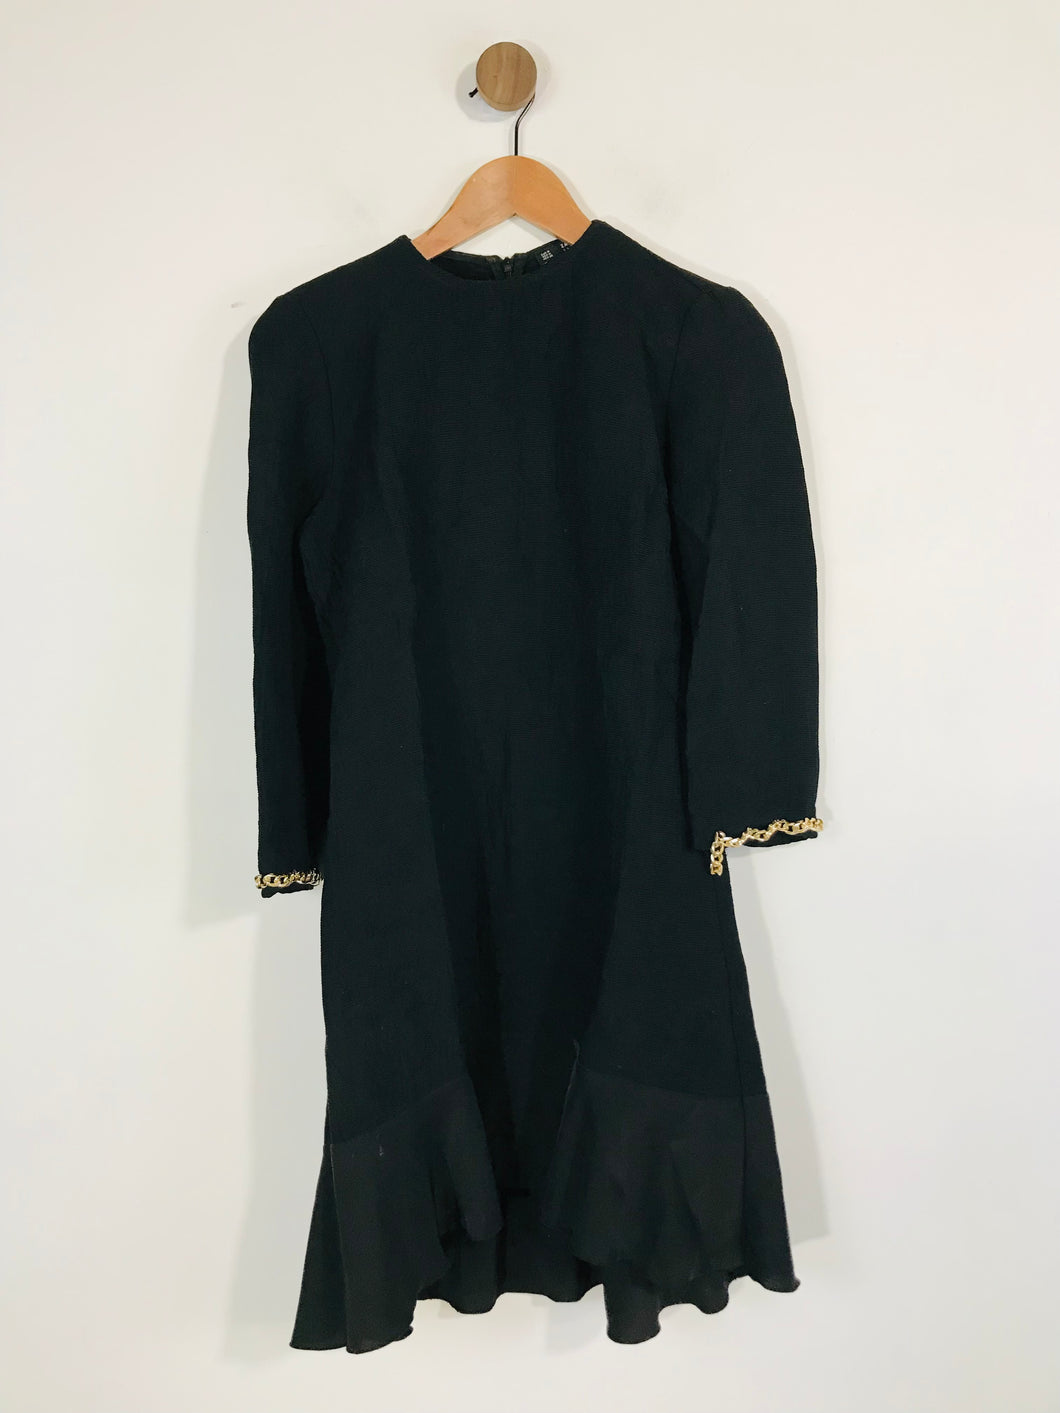 Zara Women's Embroidered Ribbed Sheath Dress | M UK10-12 | Black